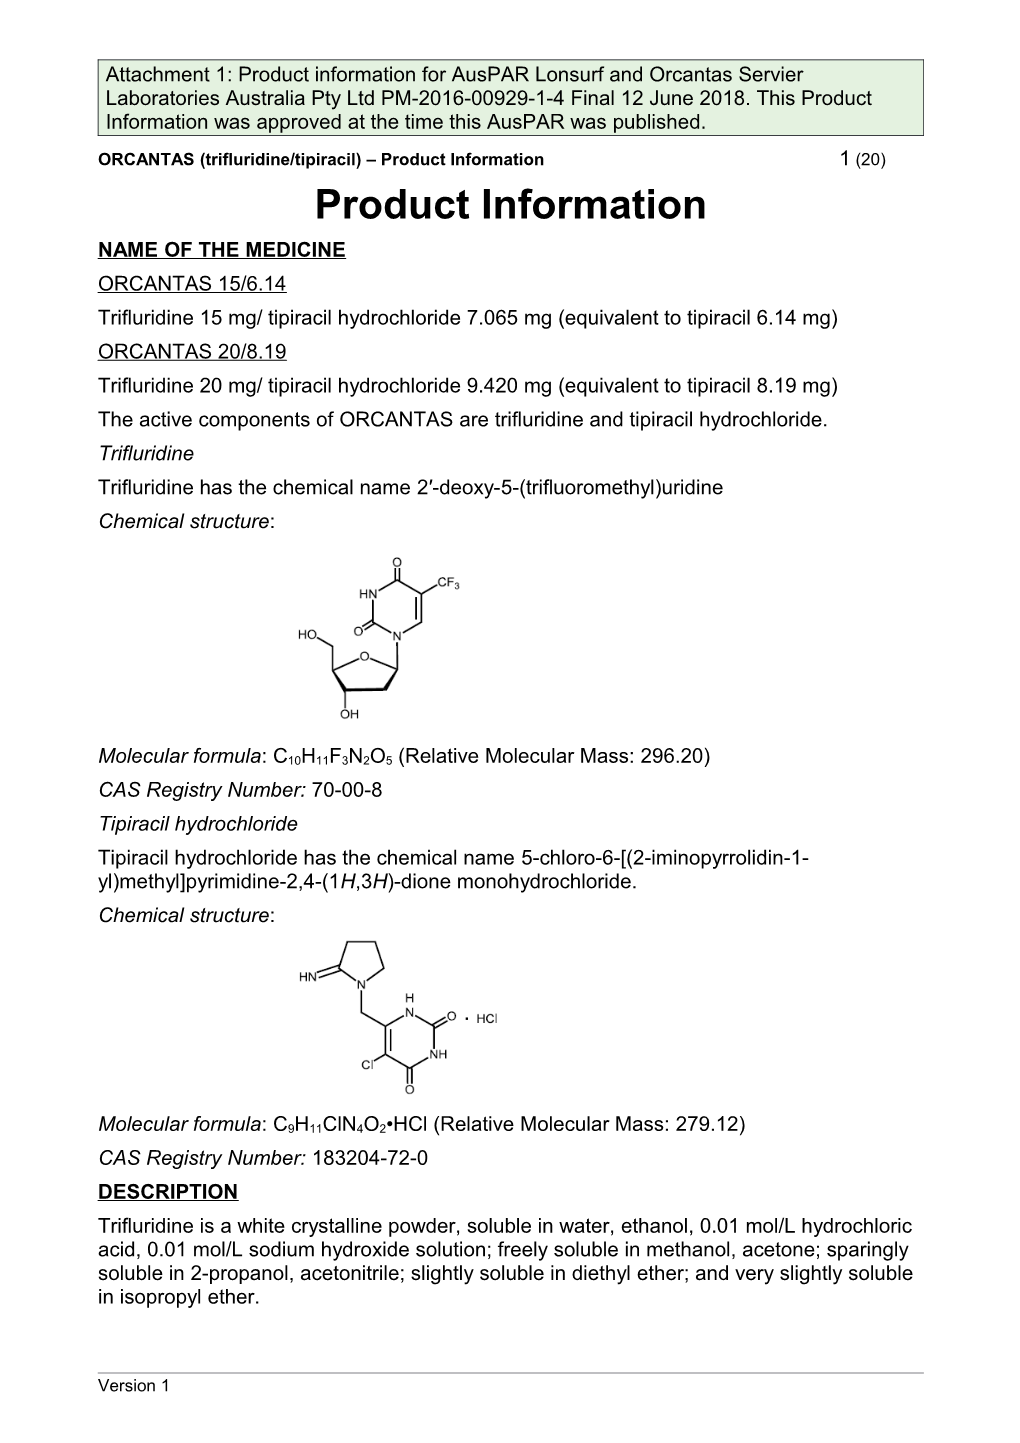 Auspar Attachment 1: Product Information: Trifluridine/Tipiracil